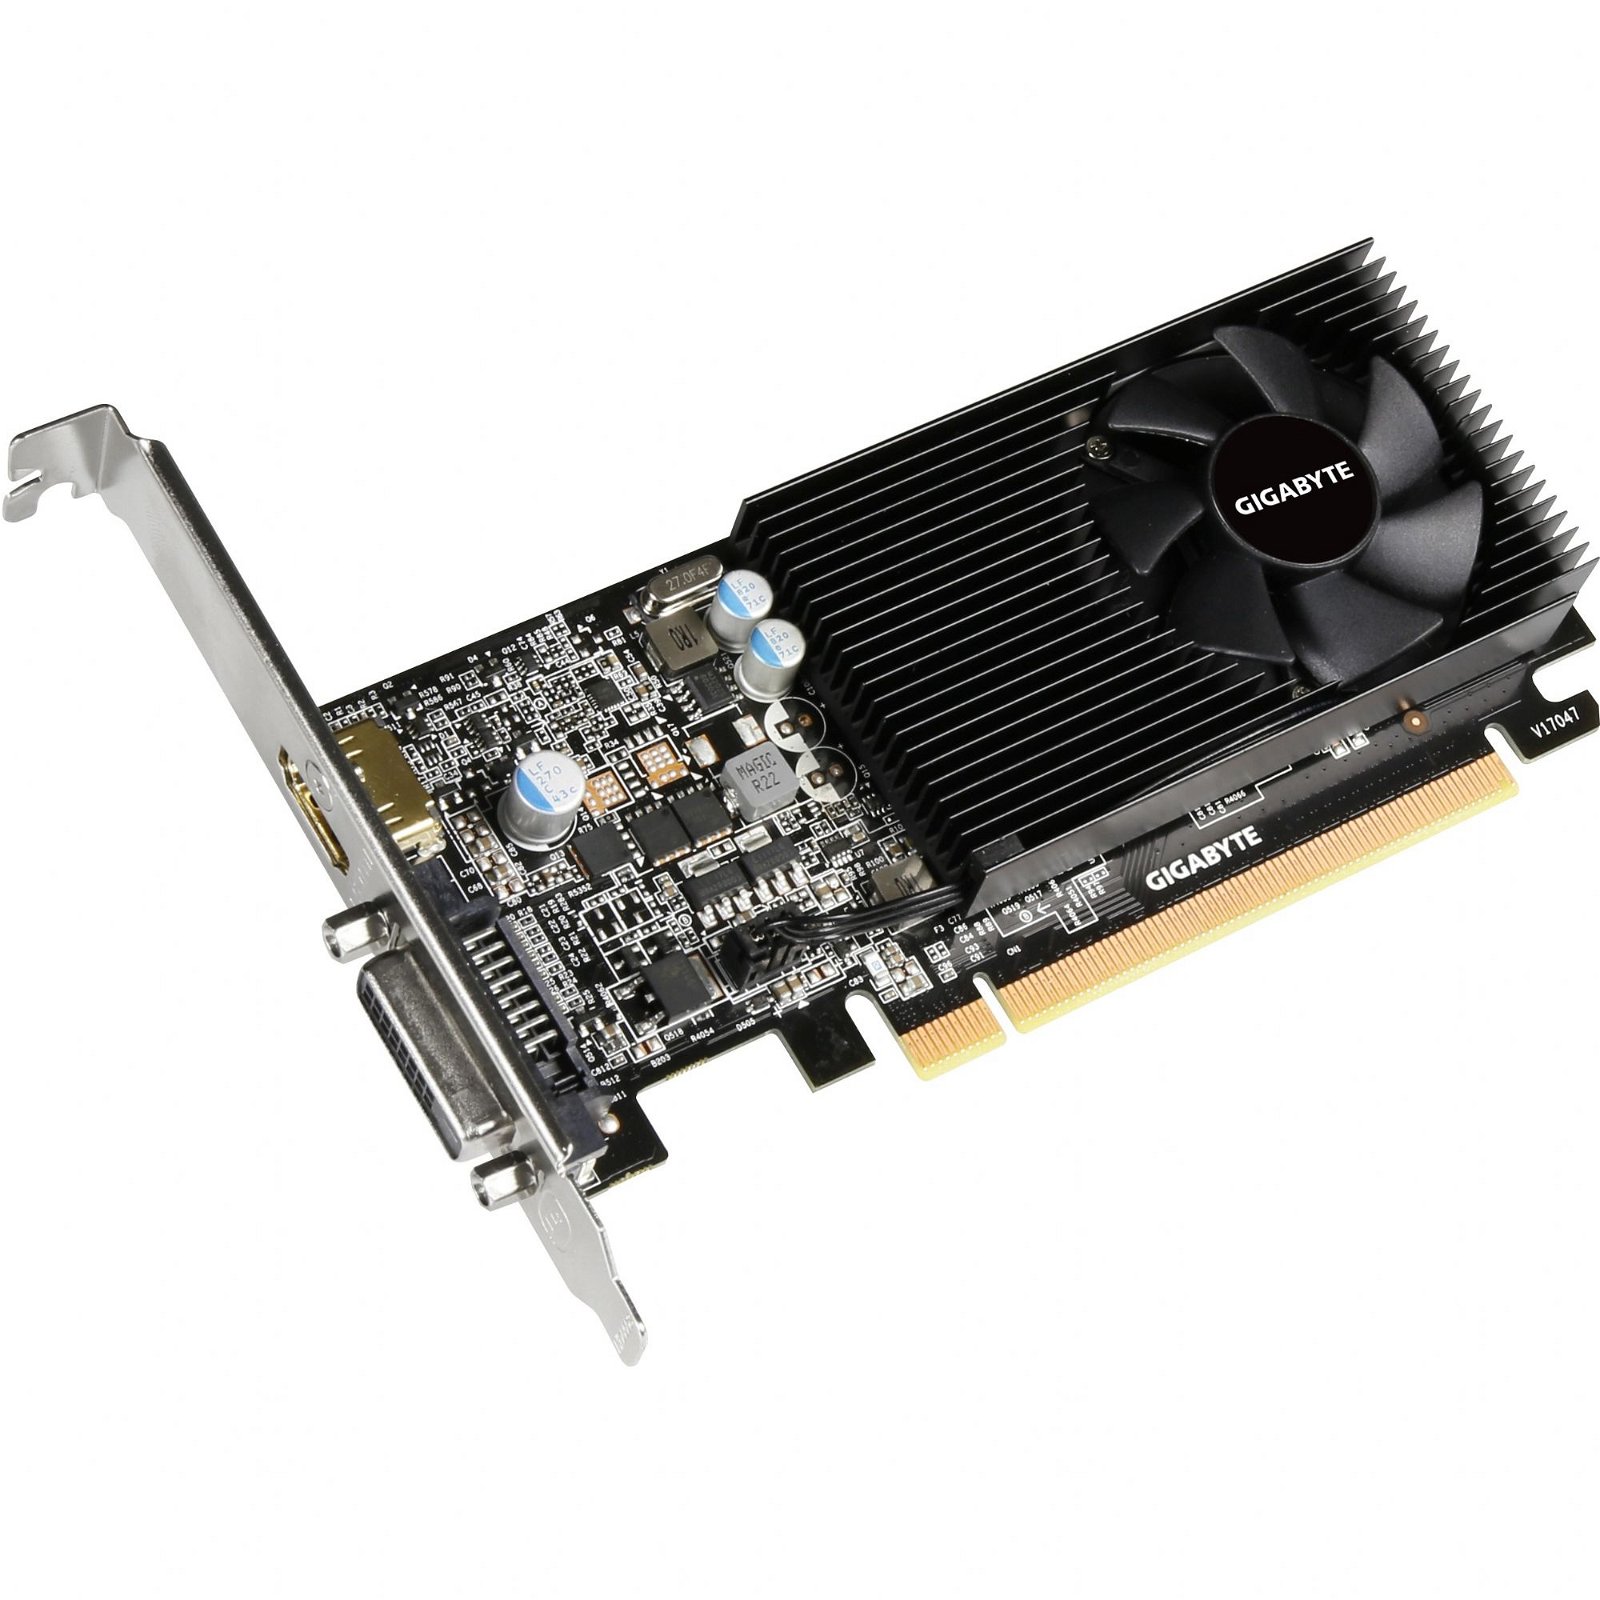 KupiHitro | Grafična kartica GIGABYTE GeForce GT 1030, 2GB GDDR5, PCI-E 2.0  - GV-N1030D5-2GL komponentko